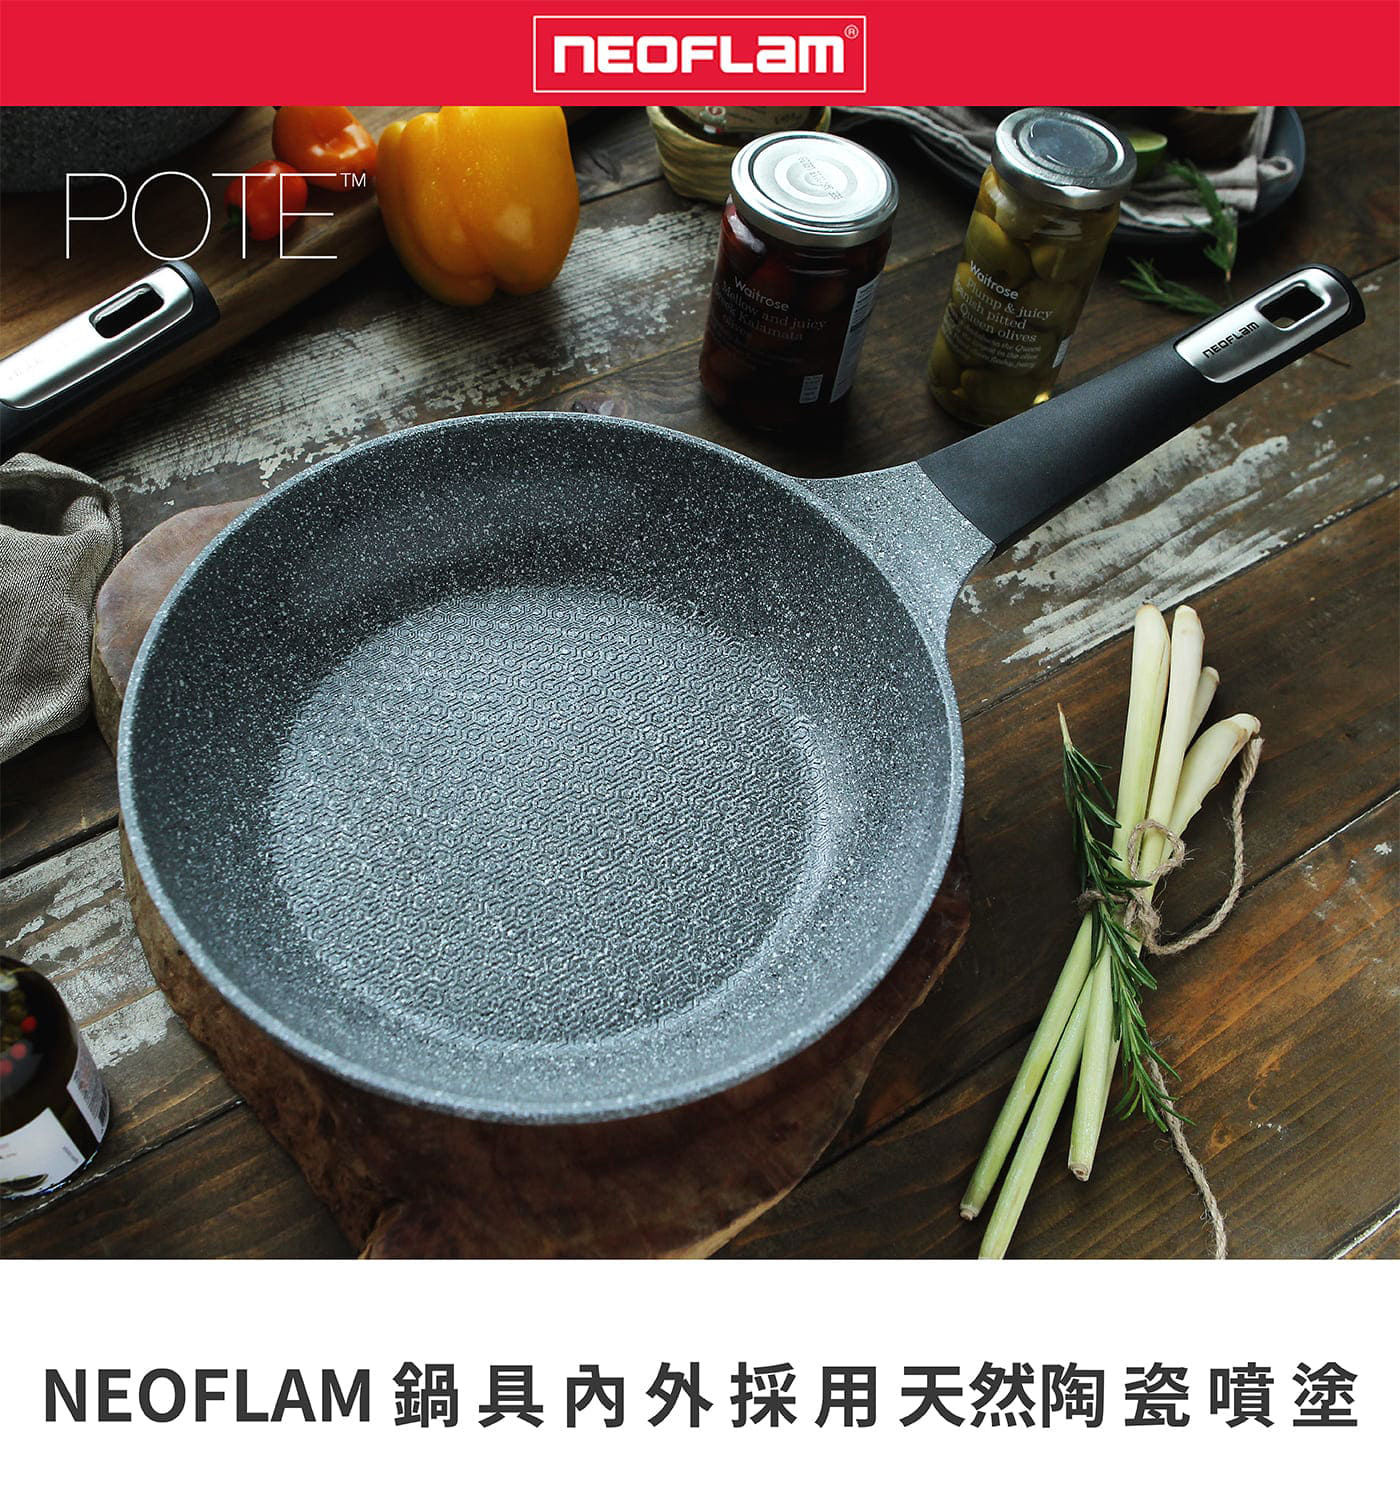 Neoflam Pote樸石28公分鑄造平底鍋，職人手作岩礦材質，鍋身鎔鑄一體成形，為鍋具保留手作質感的樸實溫度。